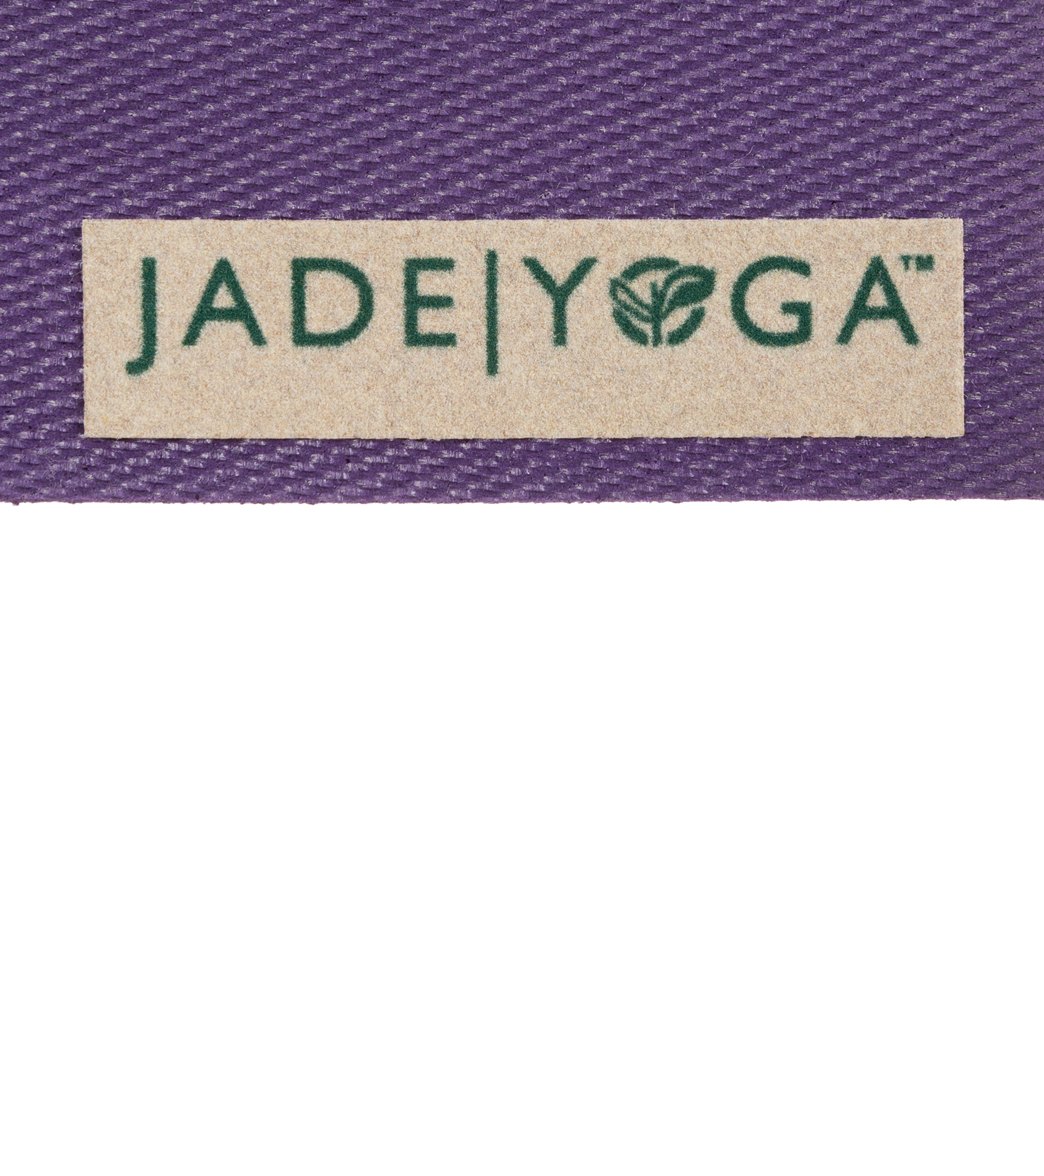 Jade Yoga Voyager Natural Rubber Yoga Mat 68 1.5mm at